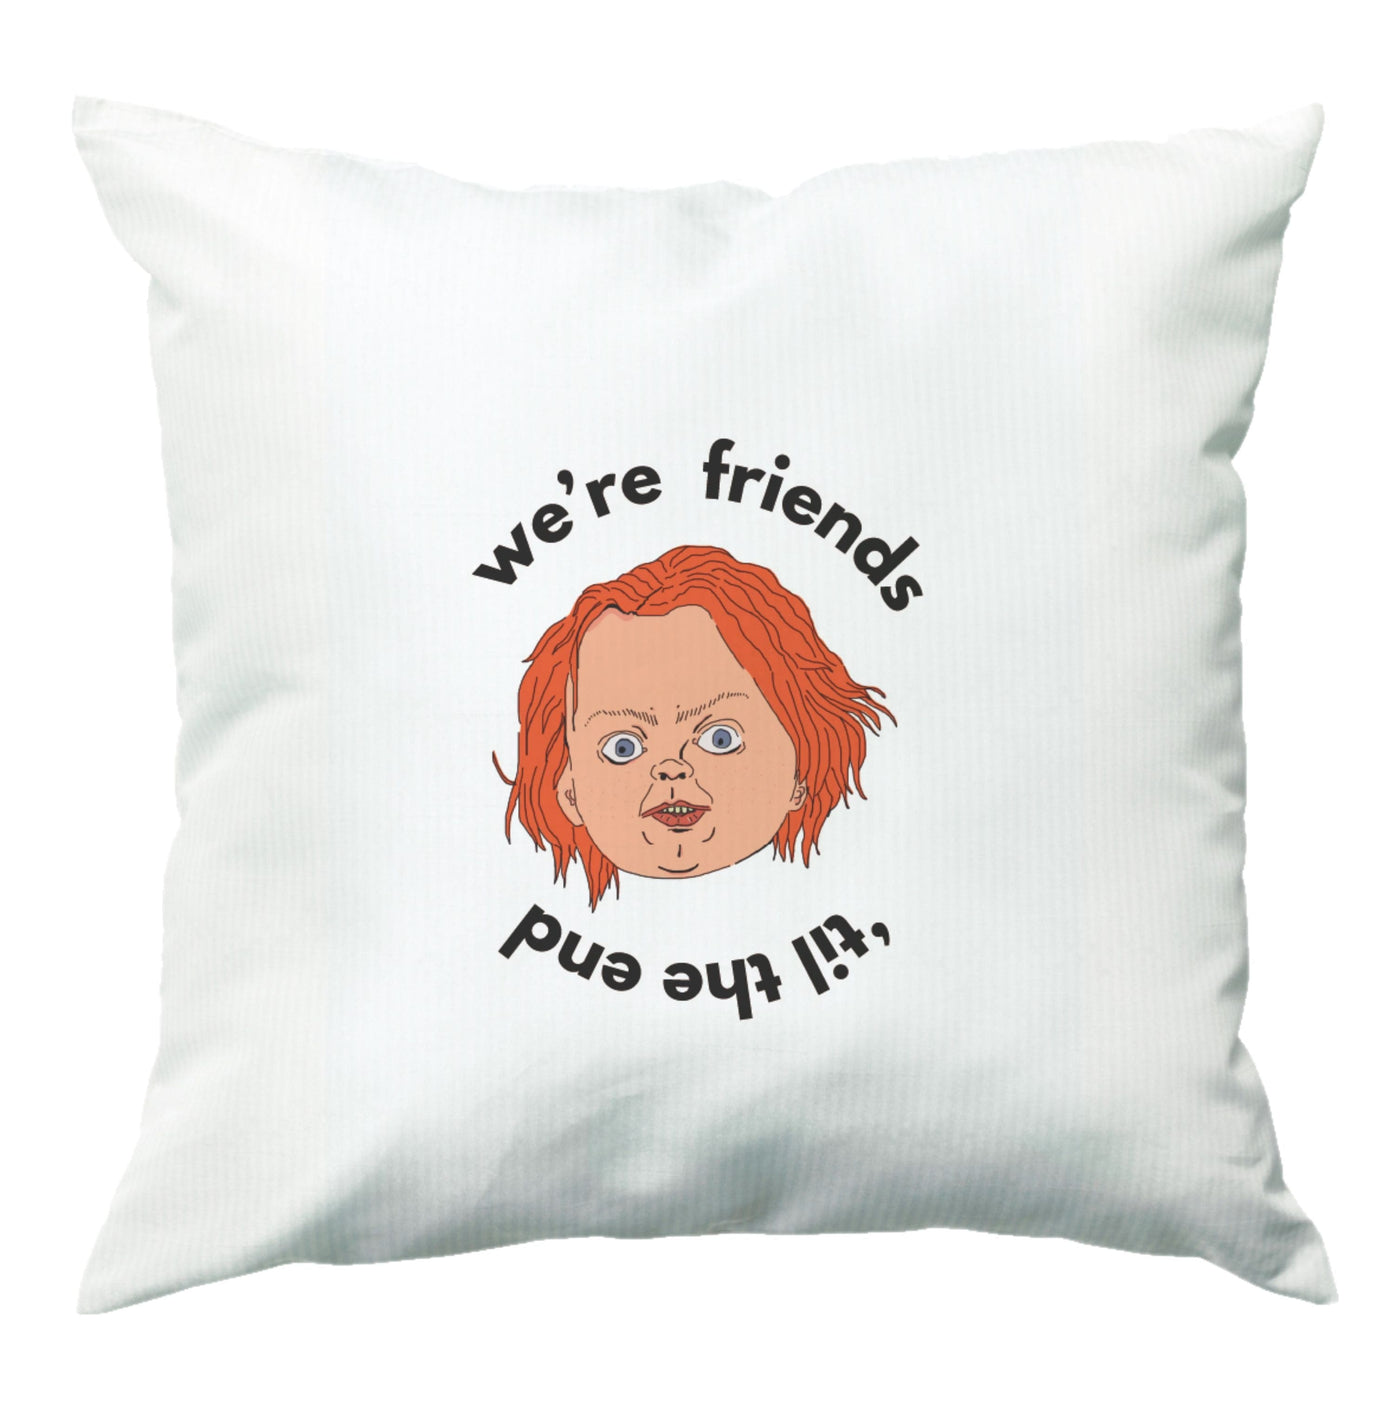 We're Friends 'til the end - Chucky Cushion